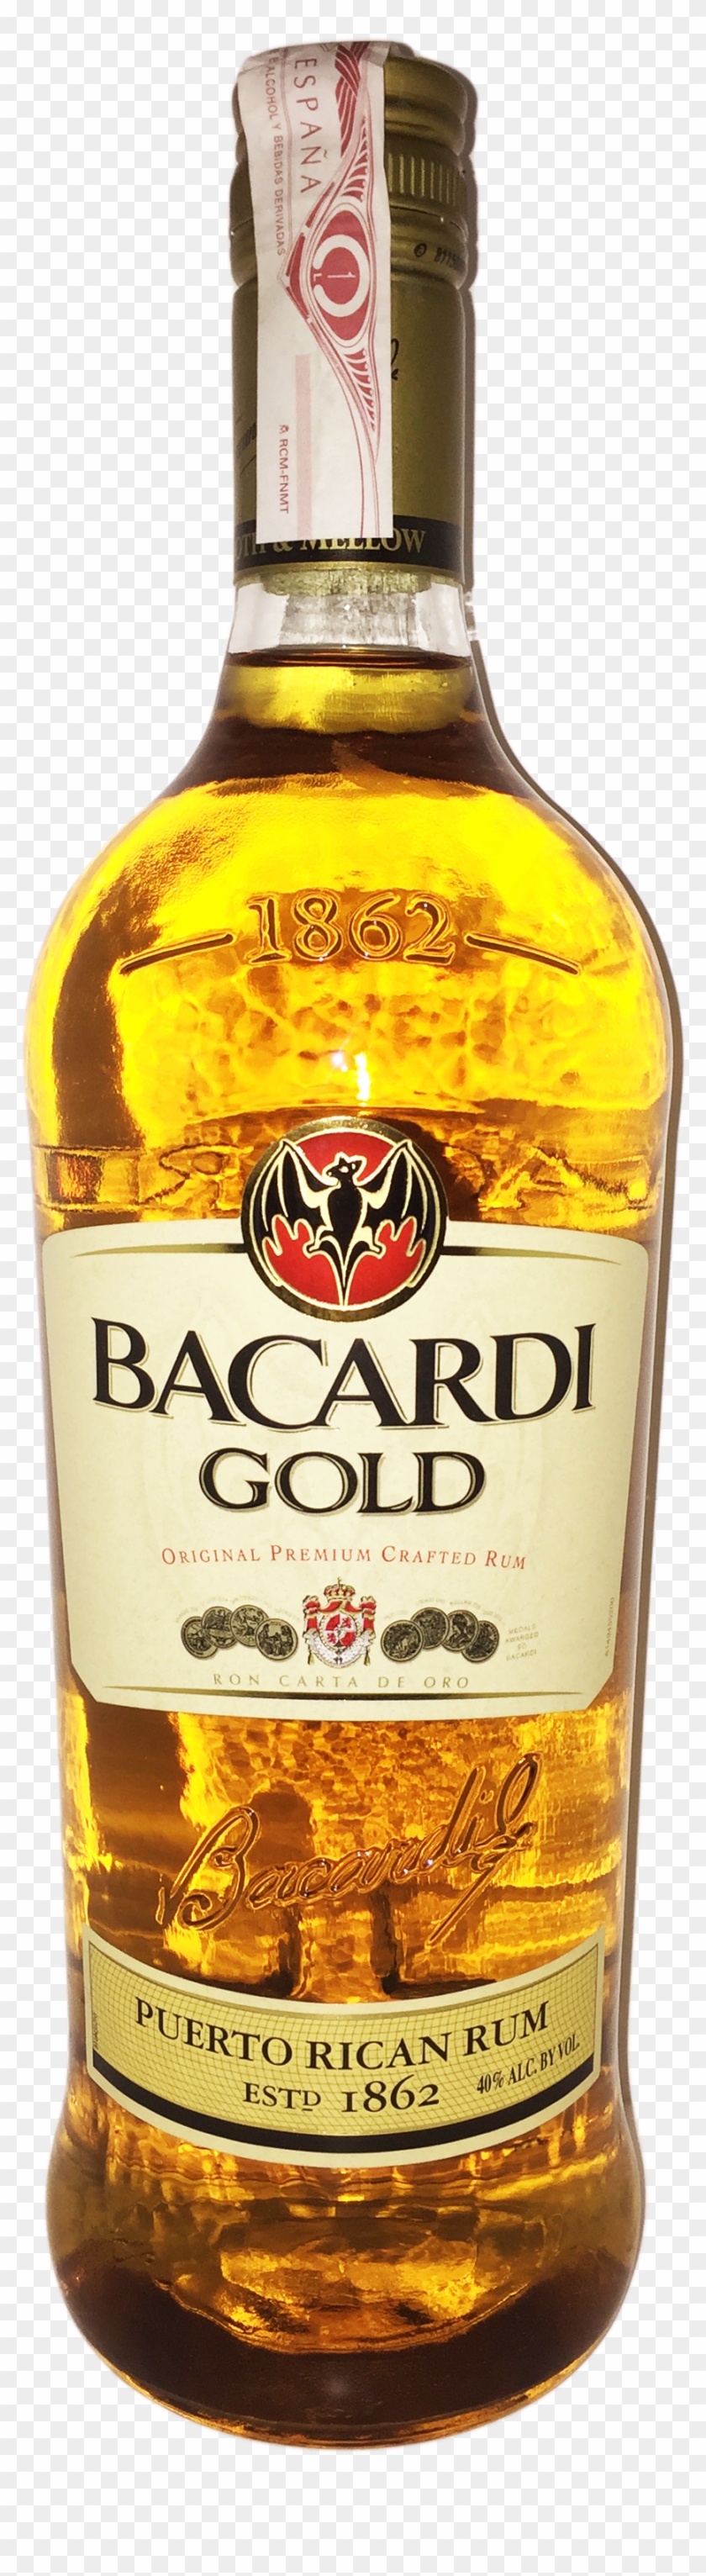 Picture Alcohol Vector Bottle Bacardi - Bacardi Clipart #5921112